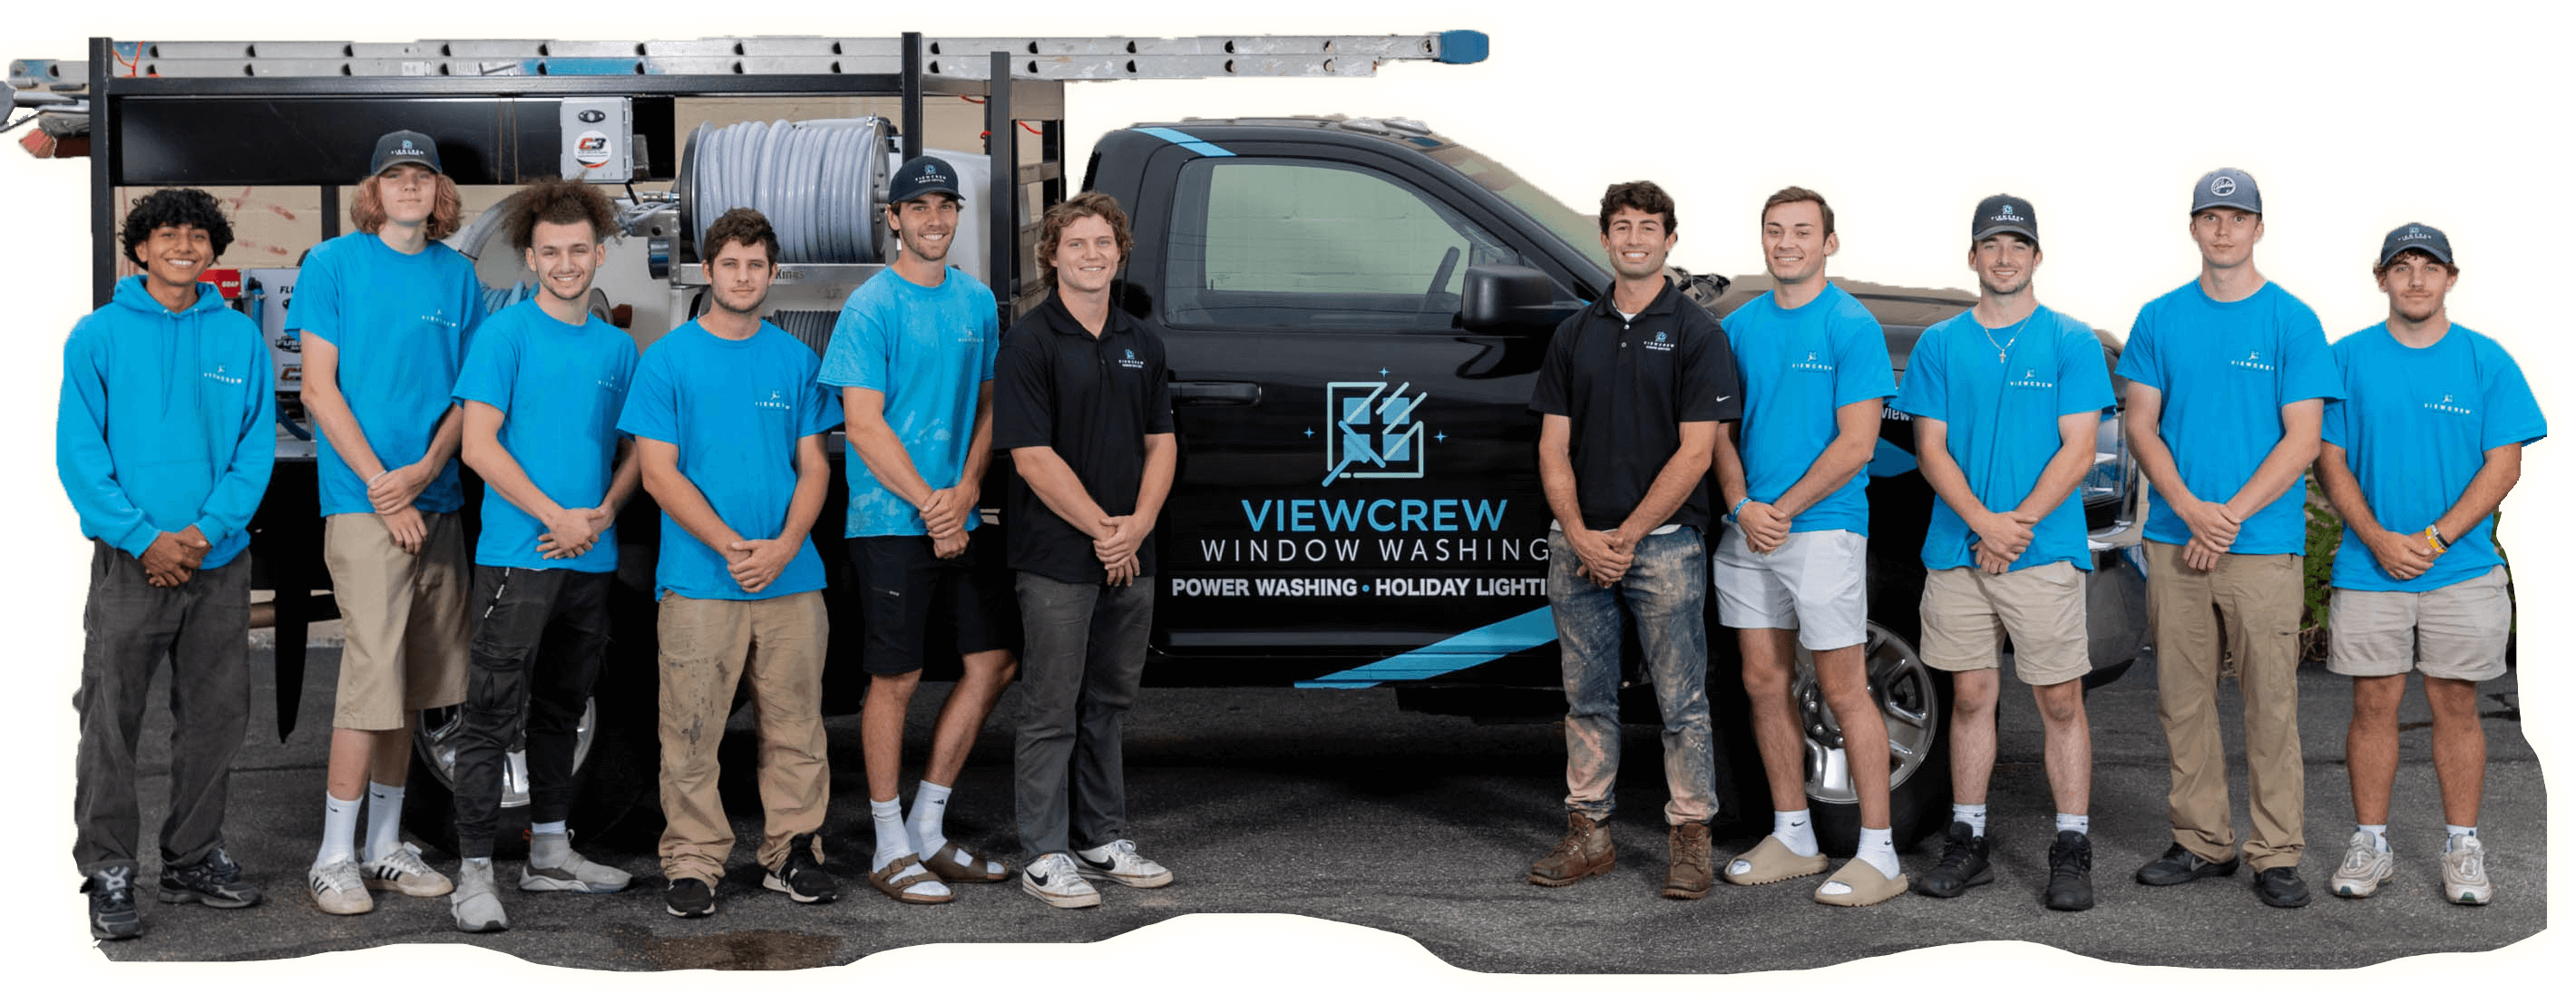 ViewCrew-Team-Photo